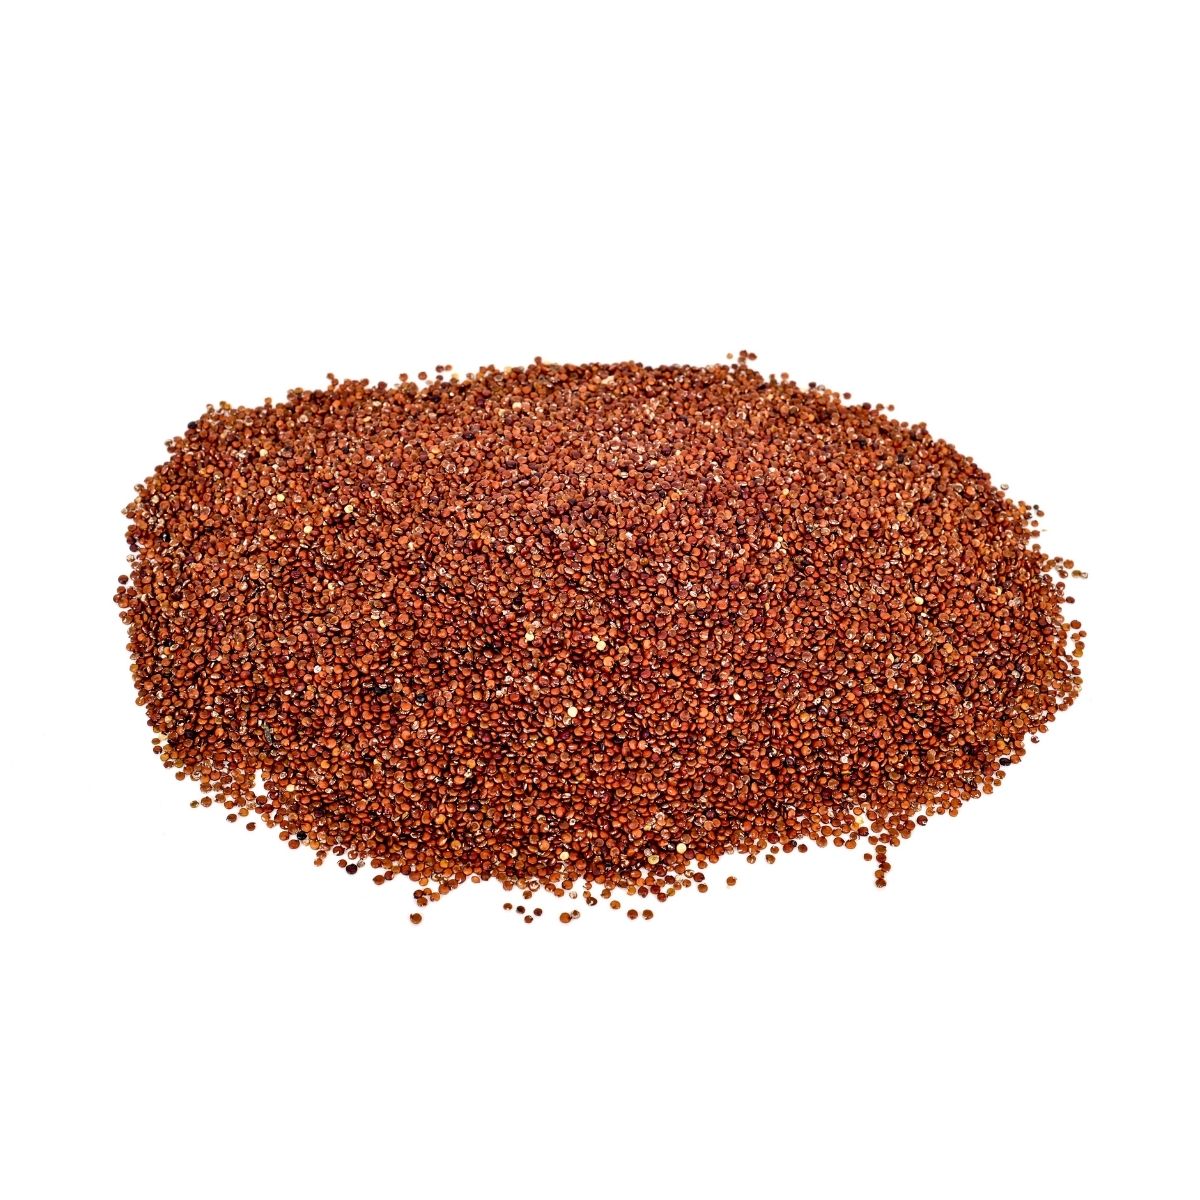 Quinoa Seed Red / Hạt Quinoa đỏ